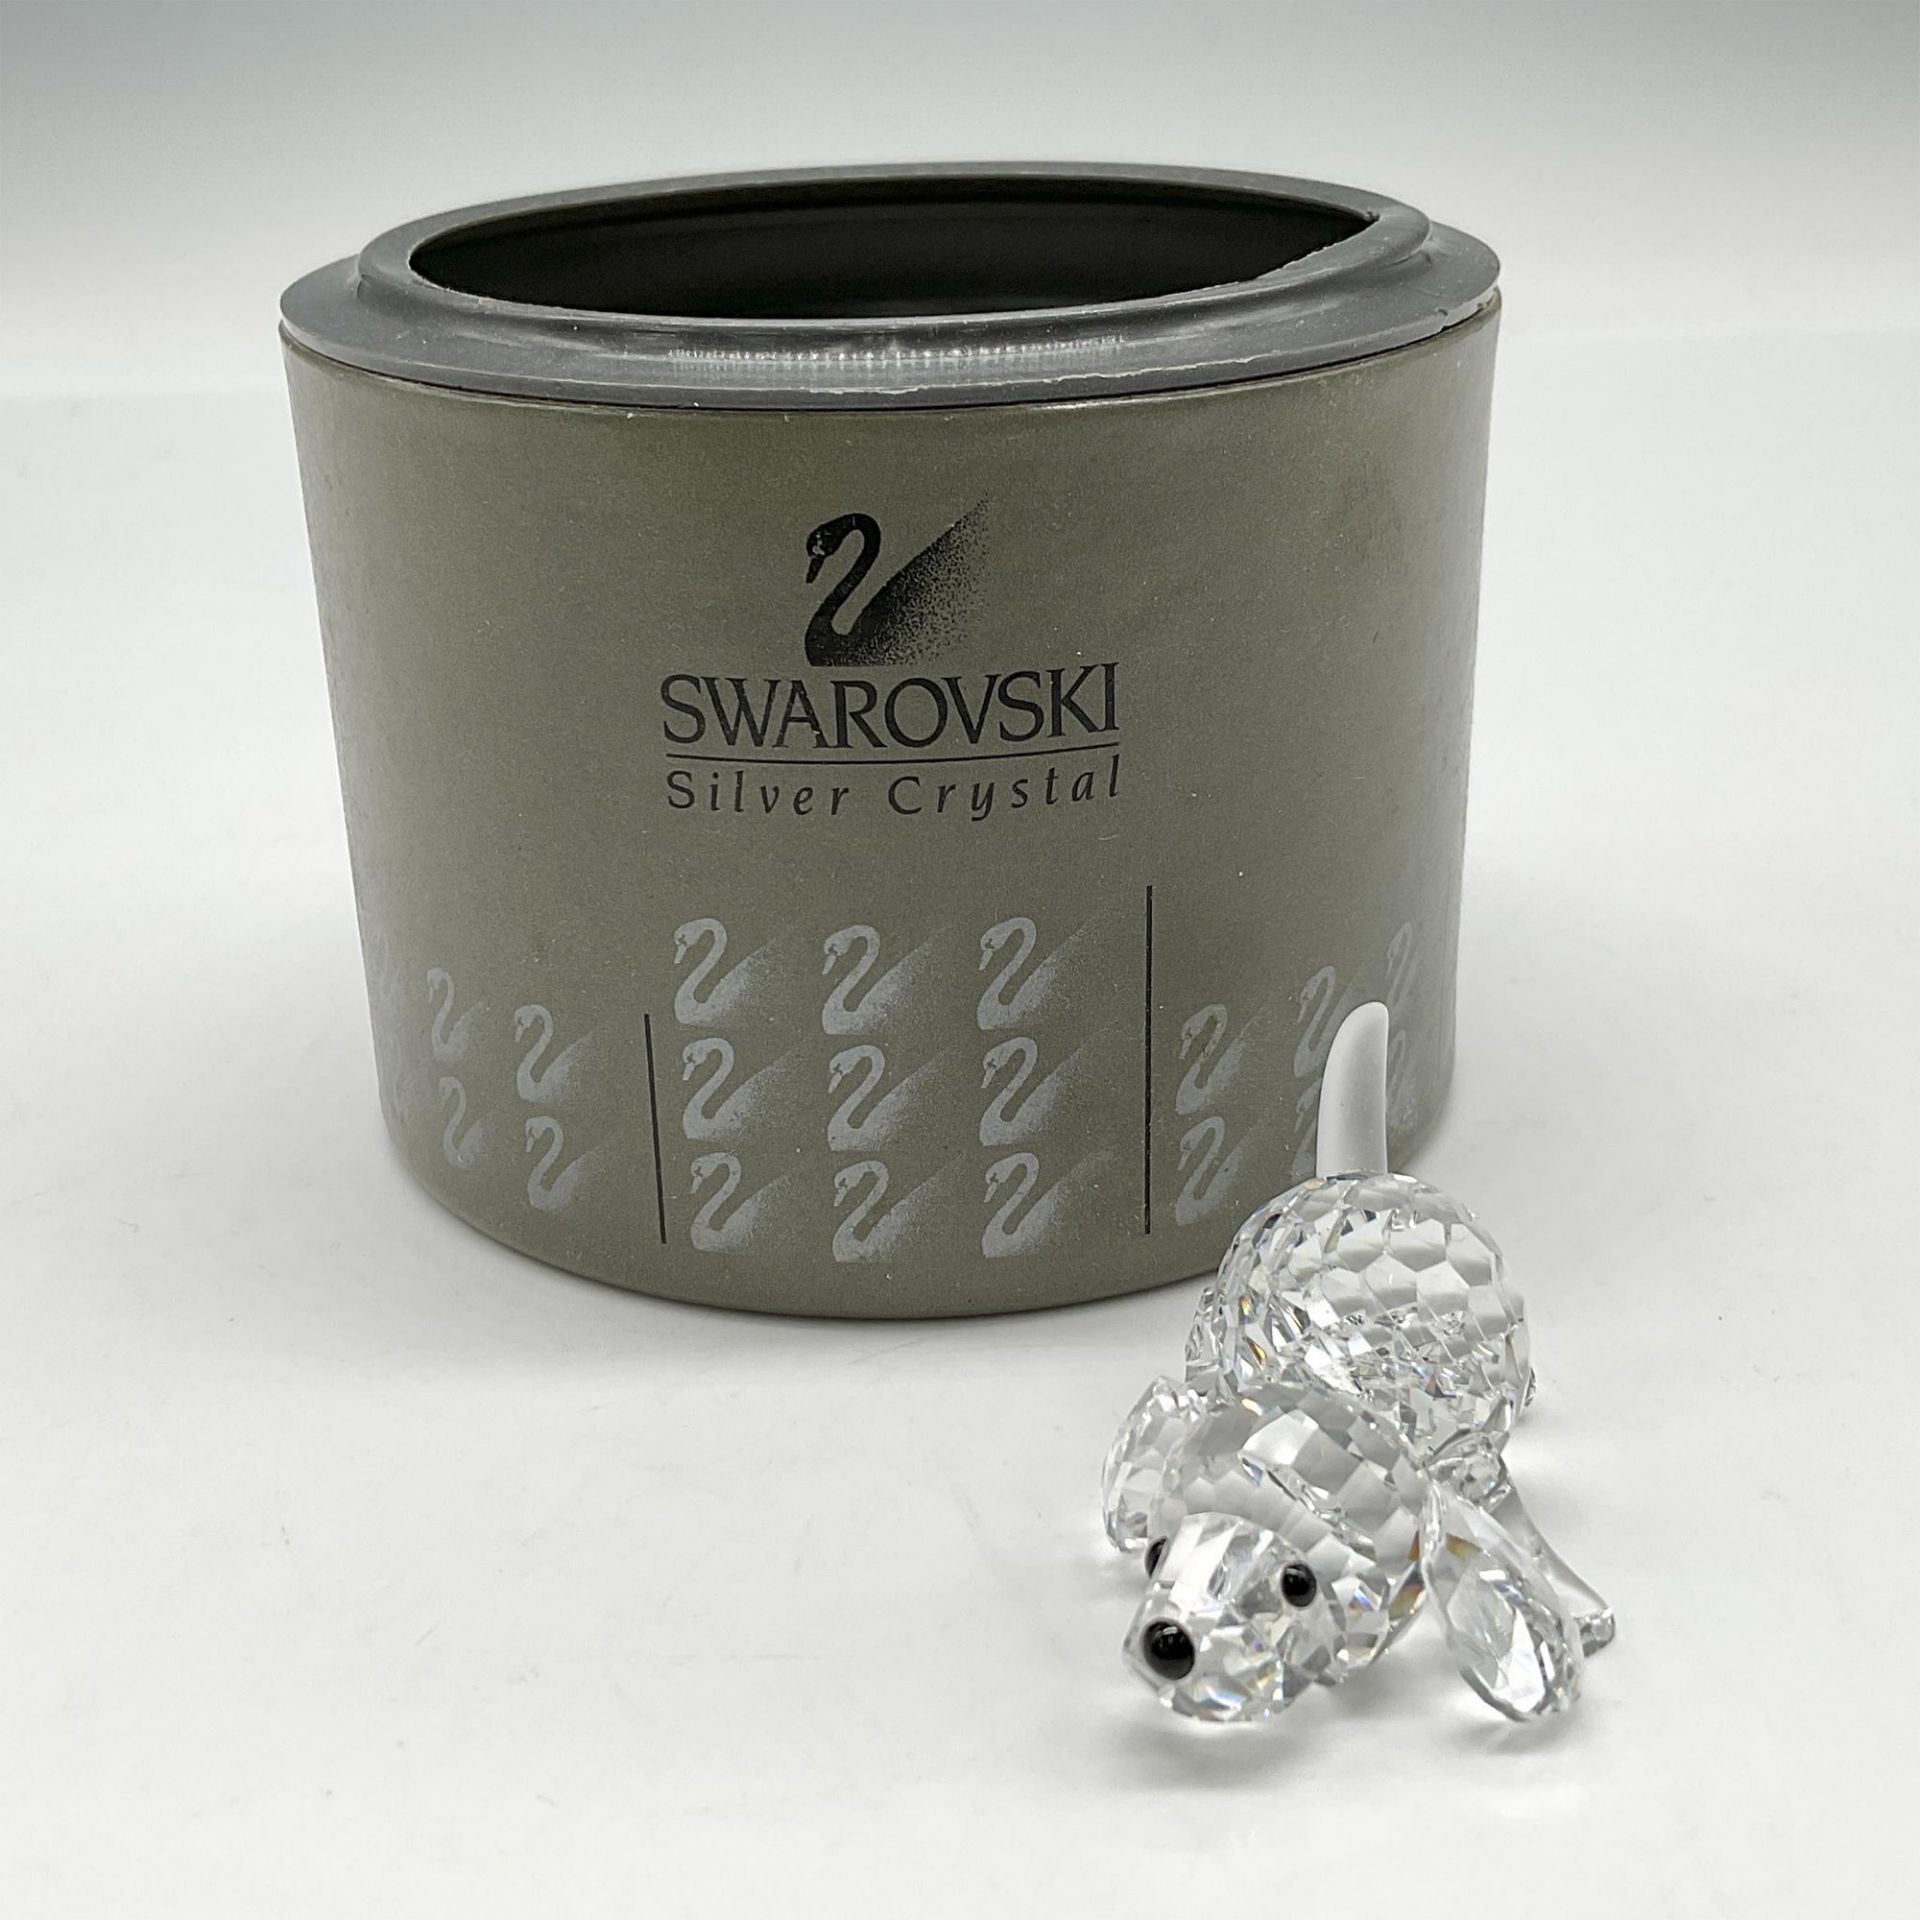 Swarovski Silver Crystal Figurine, Beagle Playing - Image 4 of 4